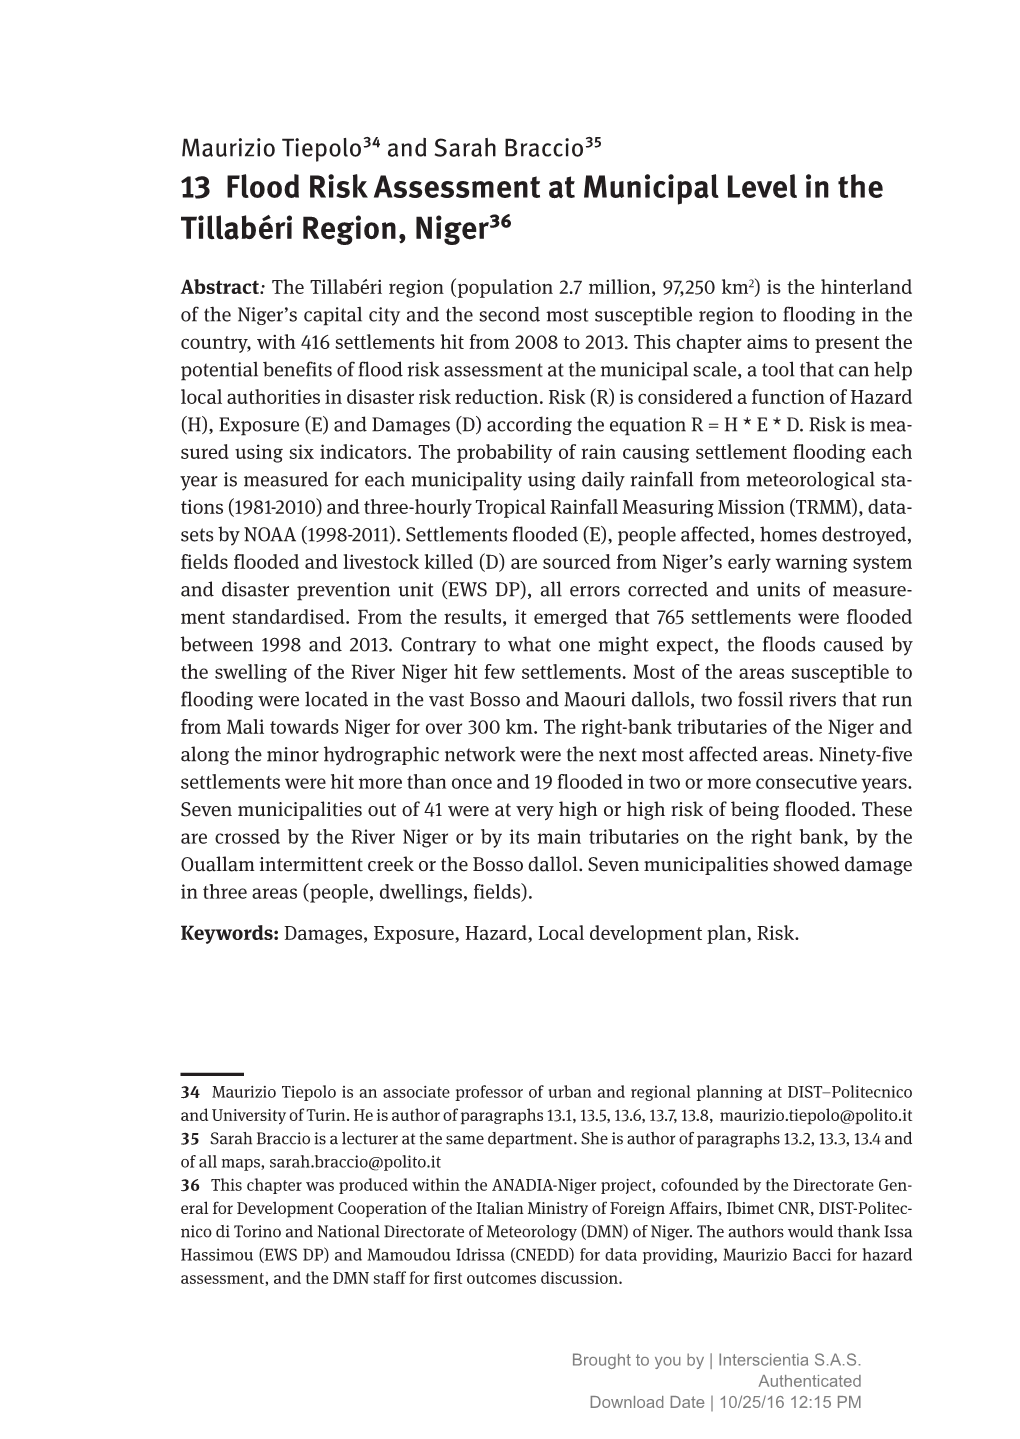 13 Flood Risk Assessment at Municipal Level in the Tillabéri Region, Niger36